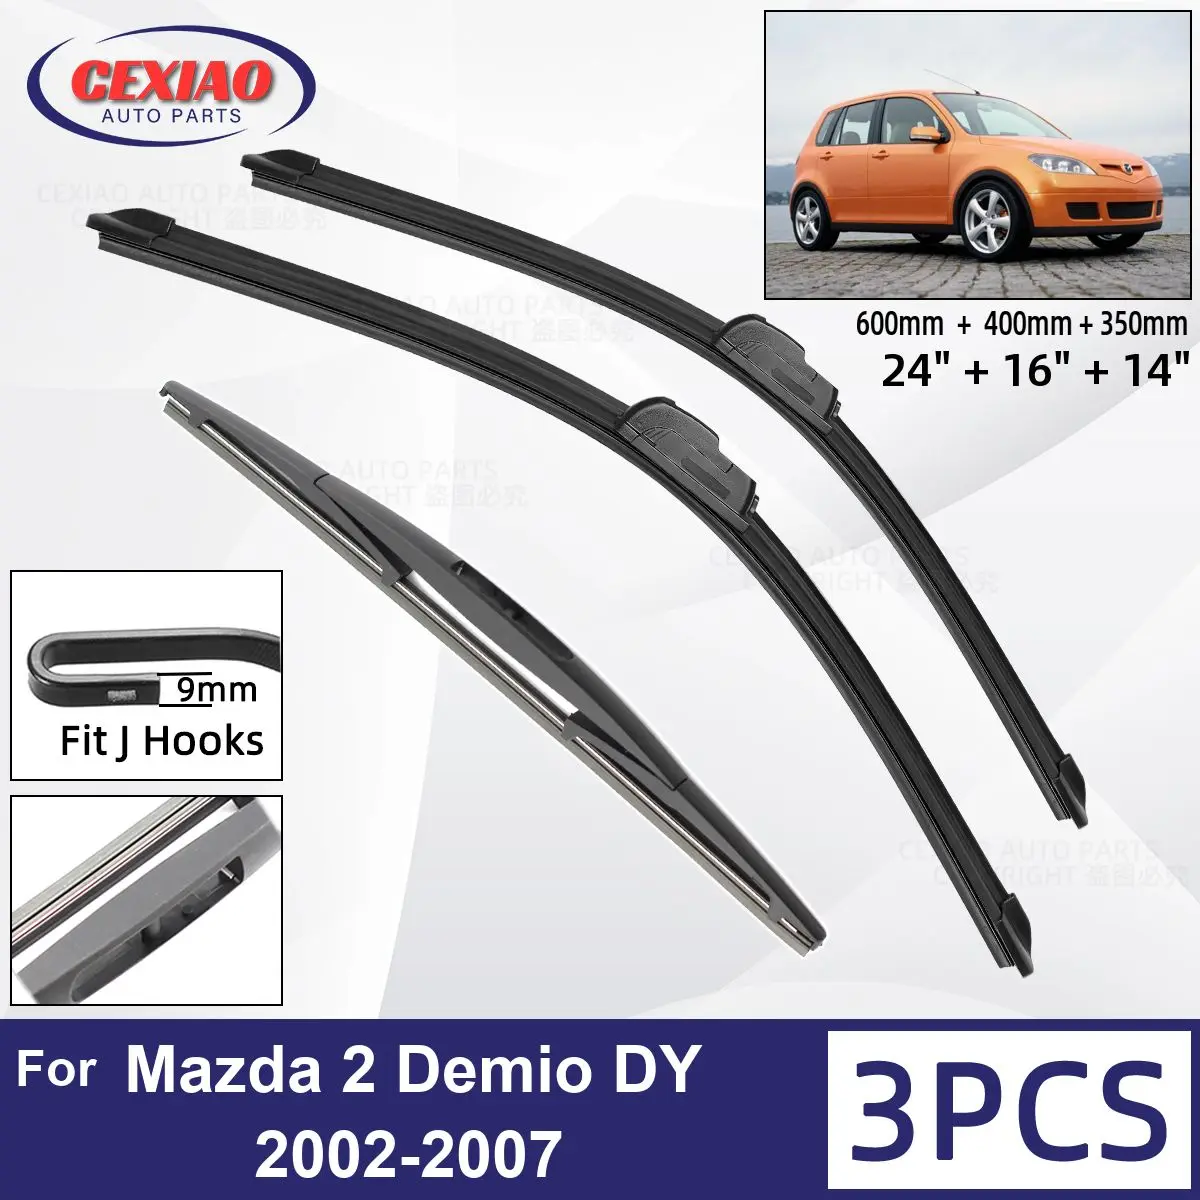 

For Mazda 2 Demio DY 2002 - 2007 Car Front Rear Wiper Blades Soft Rubber Windscreen Wipers Auto Windshield 24"+16"+14" 2005 2006